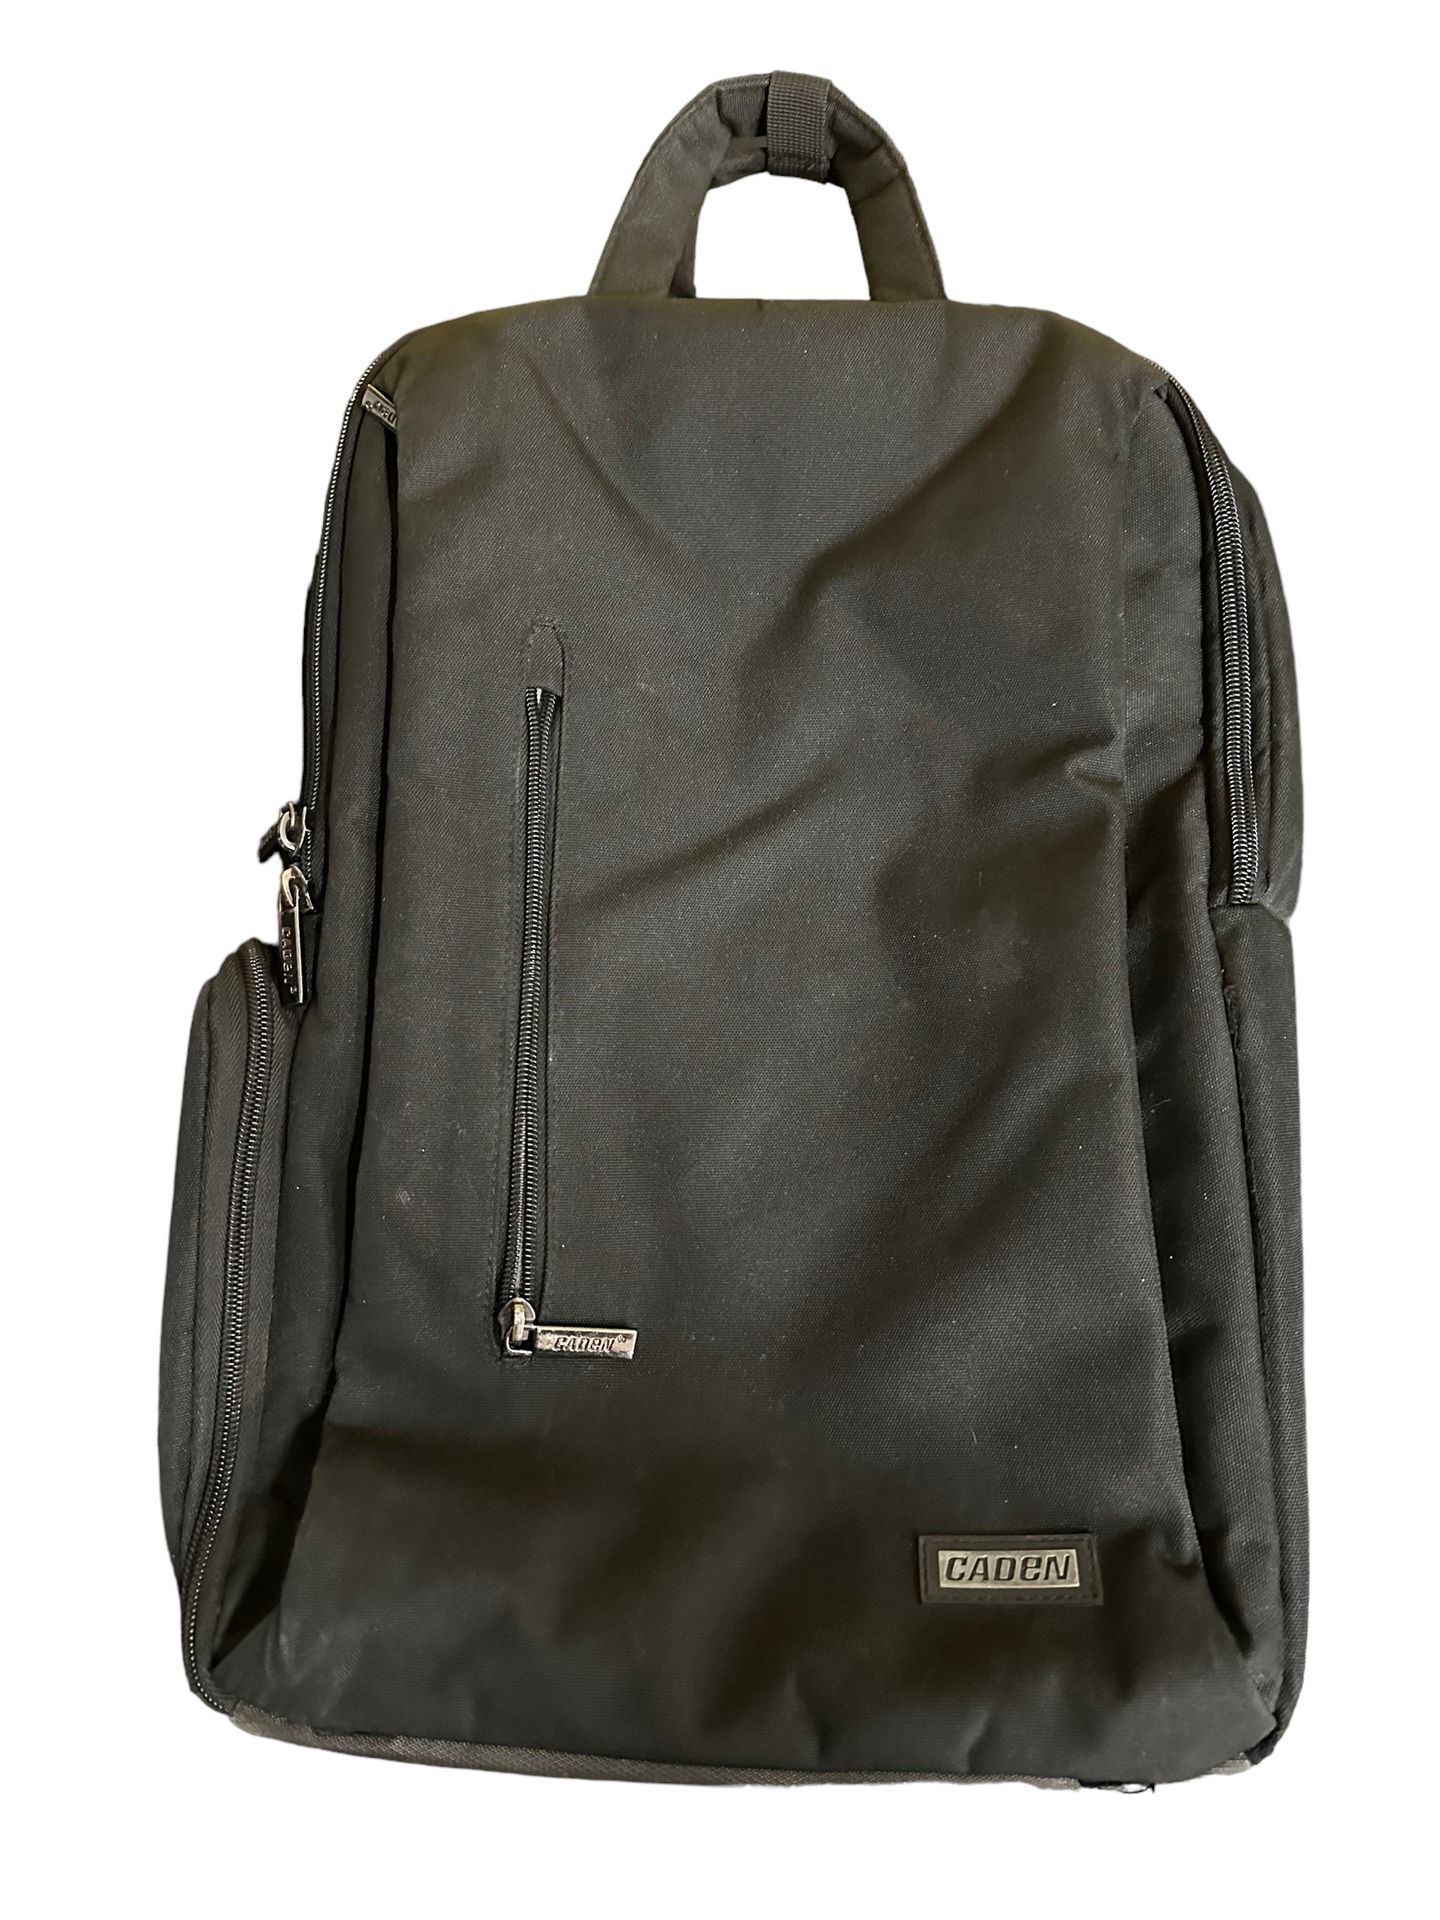 Universal Camera Bag , Photo/Video Backpack Waterproof w/USB Charging Port